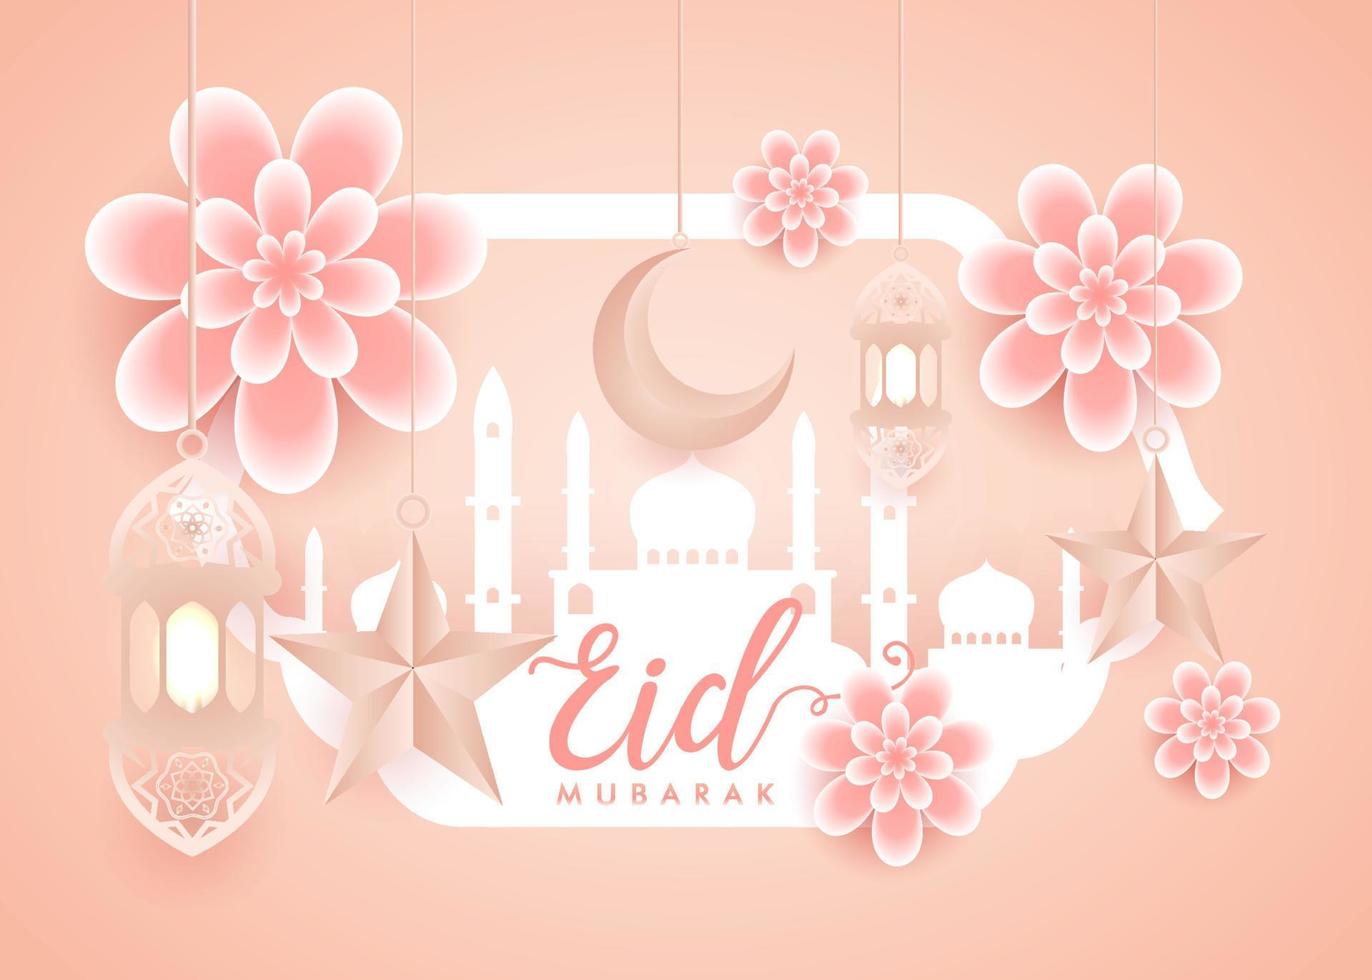 Eid mubarak, Eid al adha, Eid al fitr, greetings, celebration, calligraphy  card poster with lamp vector banner